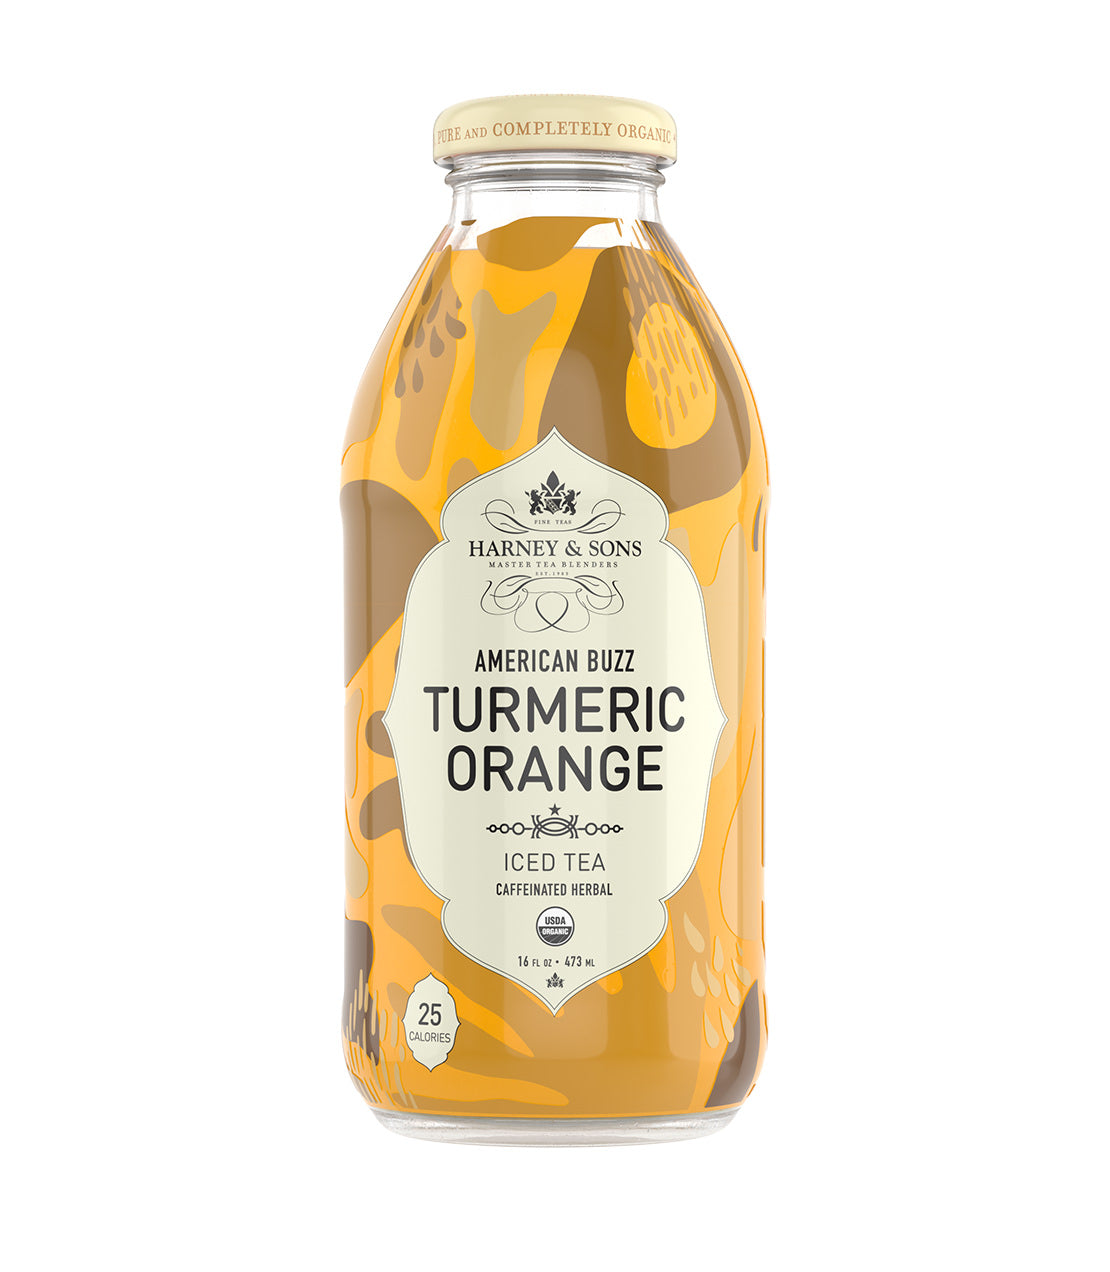 American Buzz Turmeric Orange Iced Tea - 16 oz. Bottle Case of 12 Bottles - Harney & Sons Fine Teas